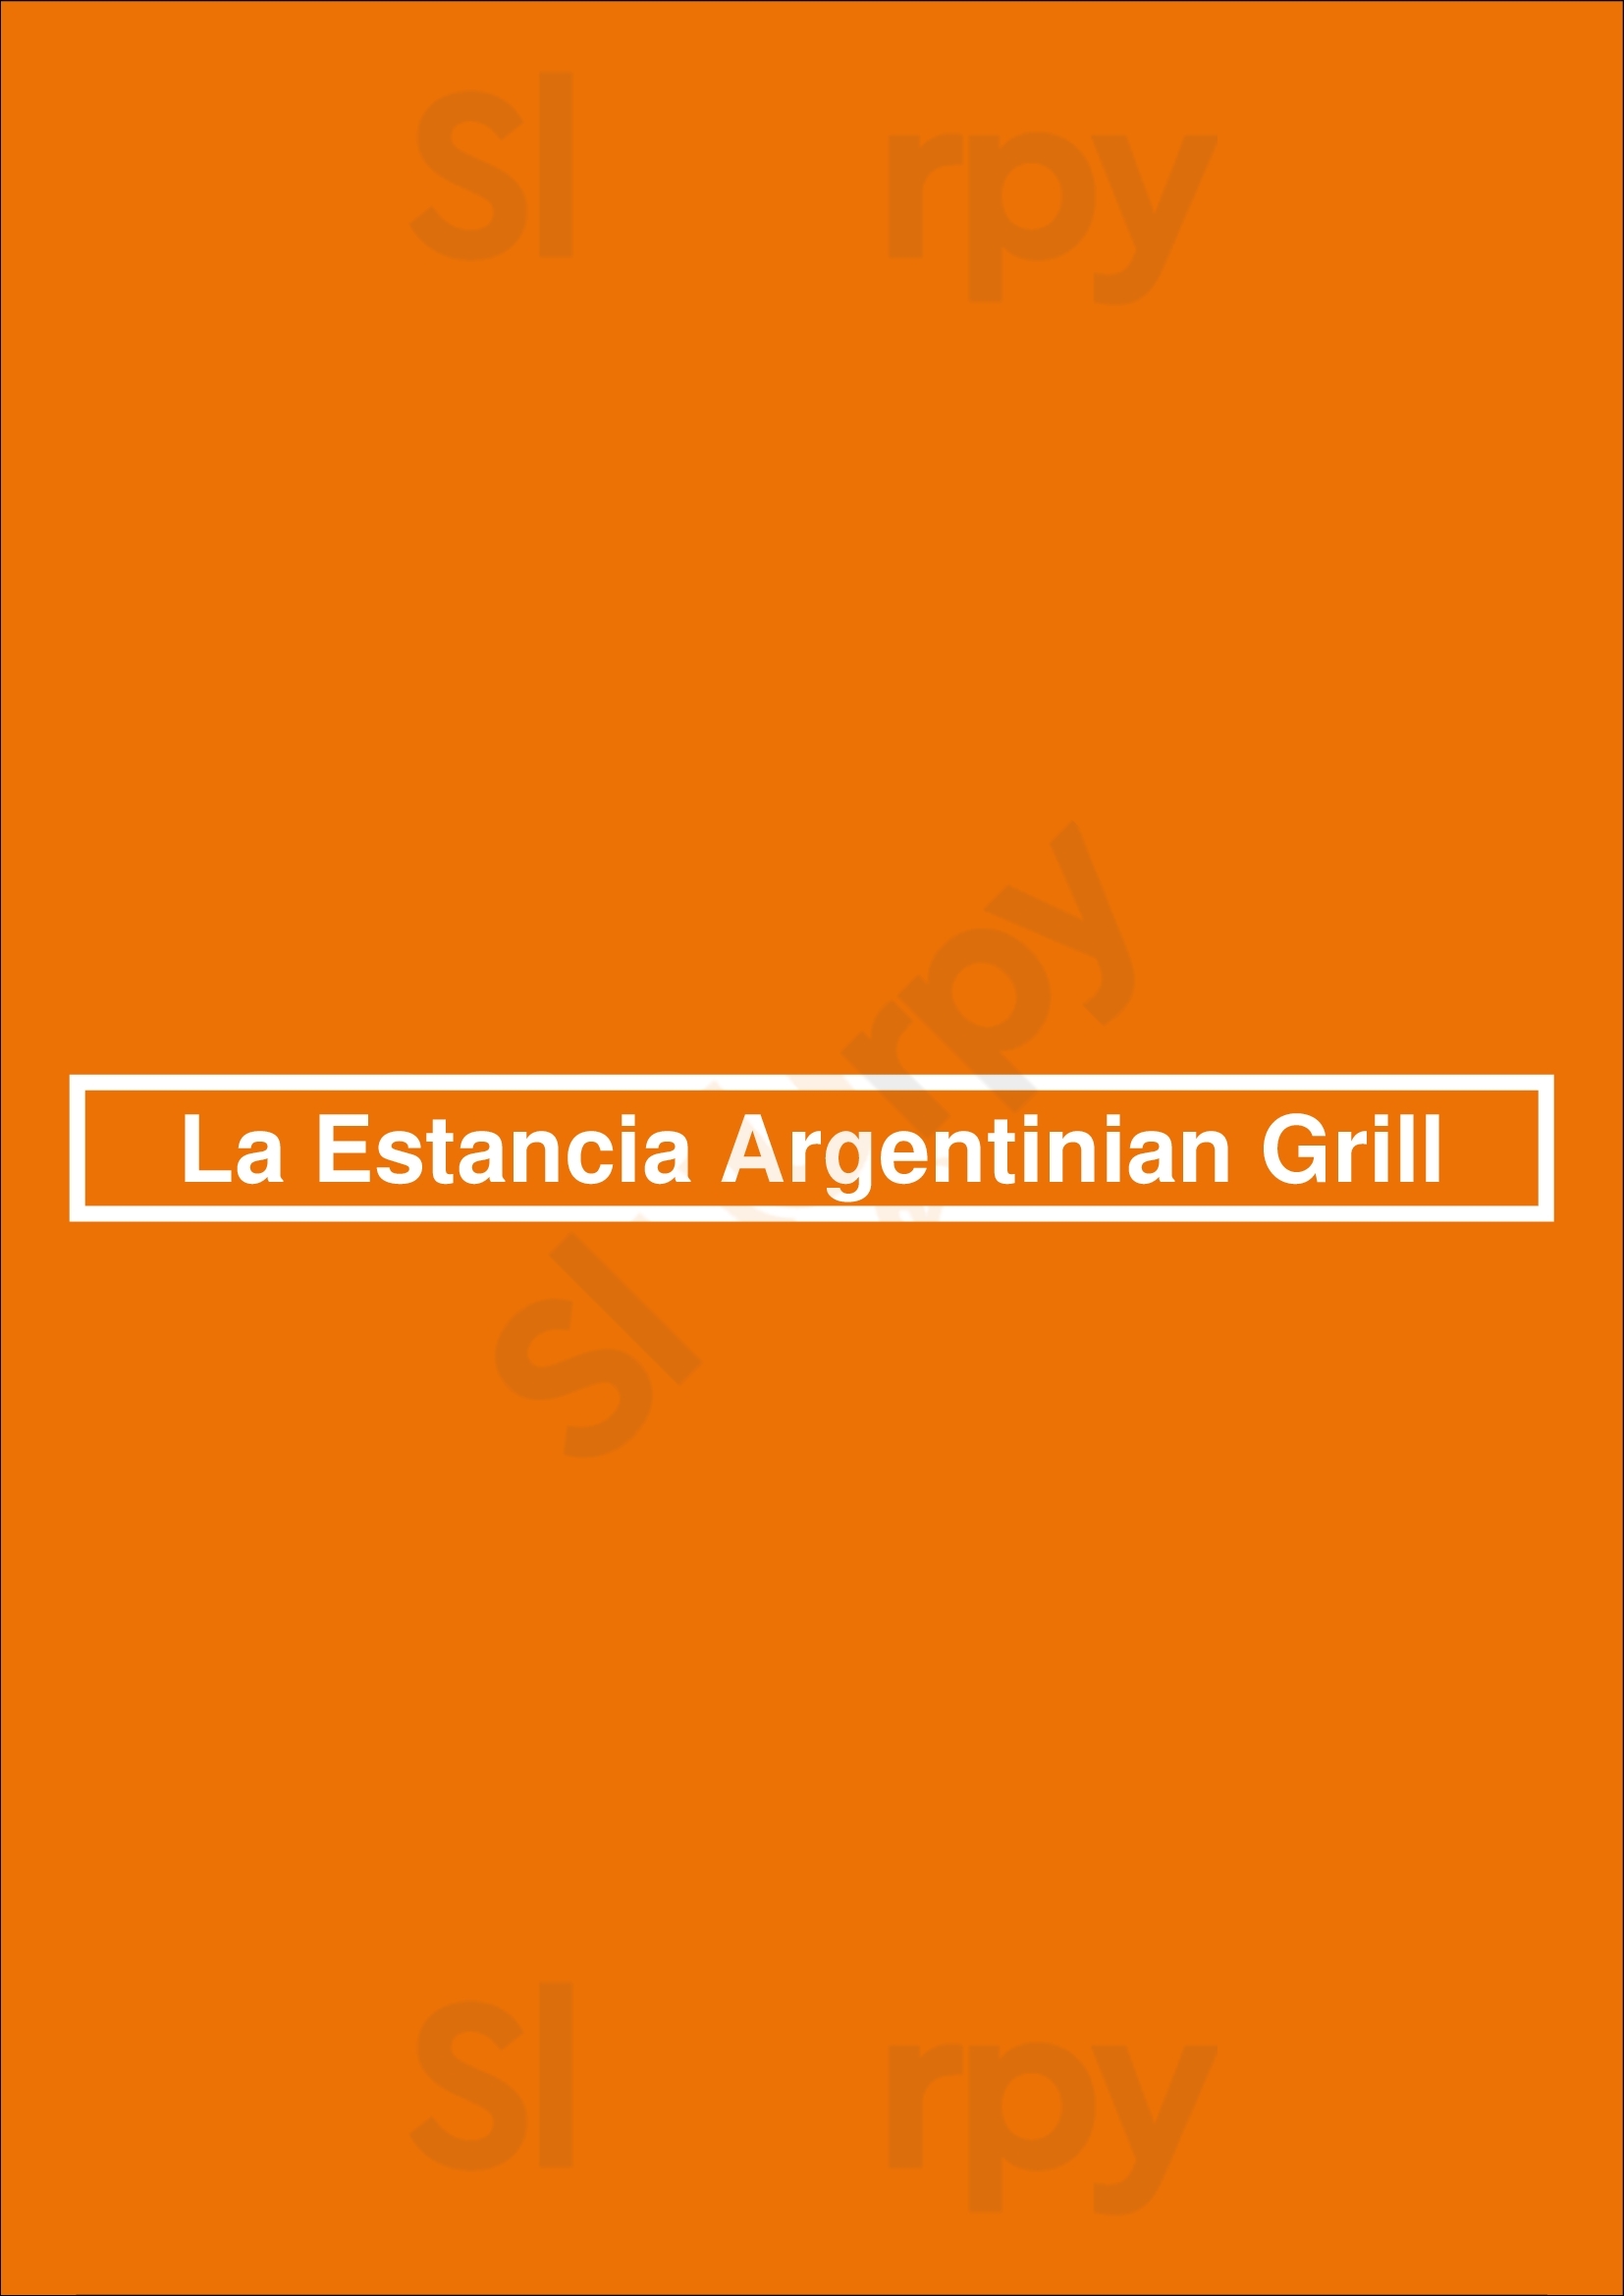 La Estancia Argentinian Grill Amsterdam Menu - 1